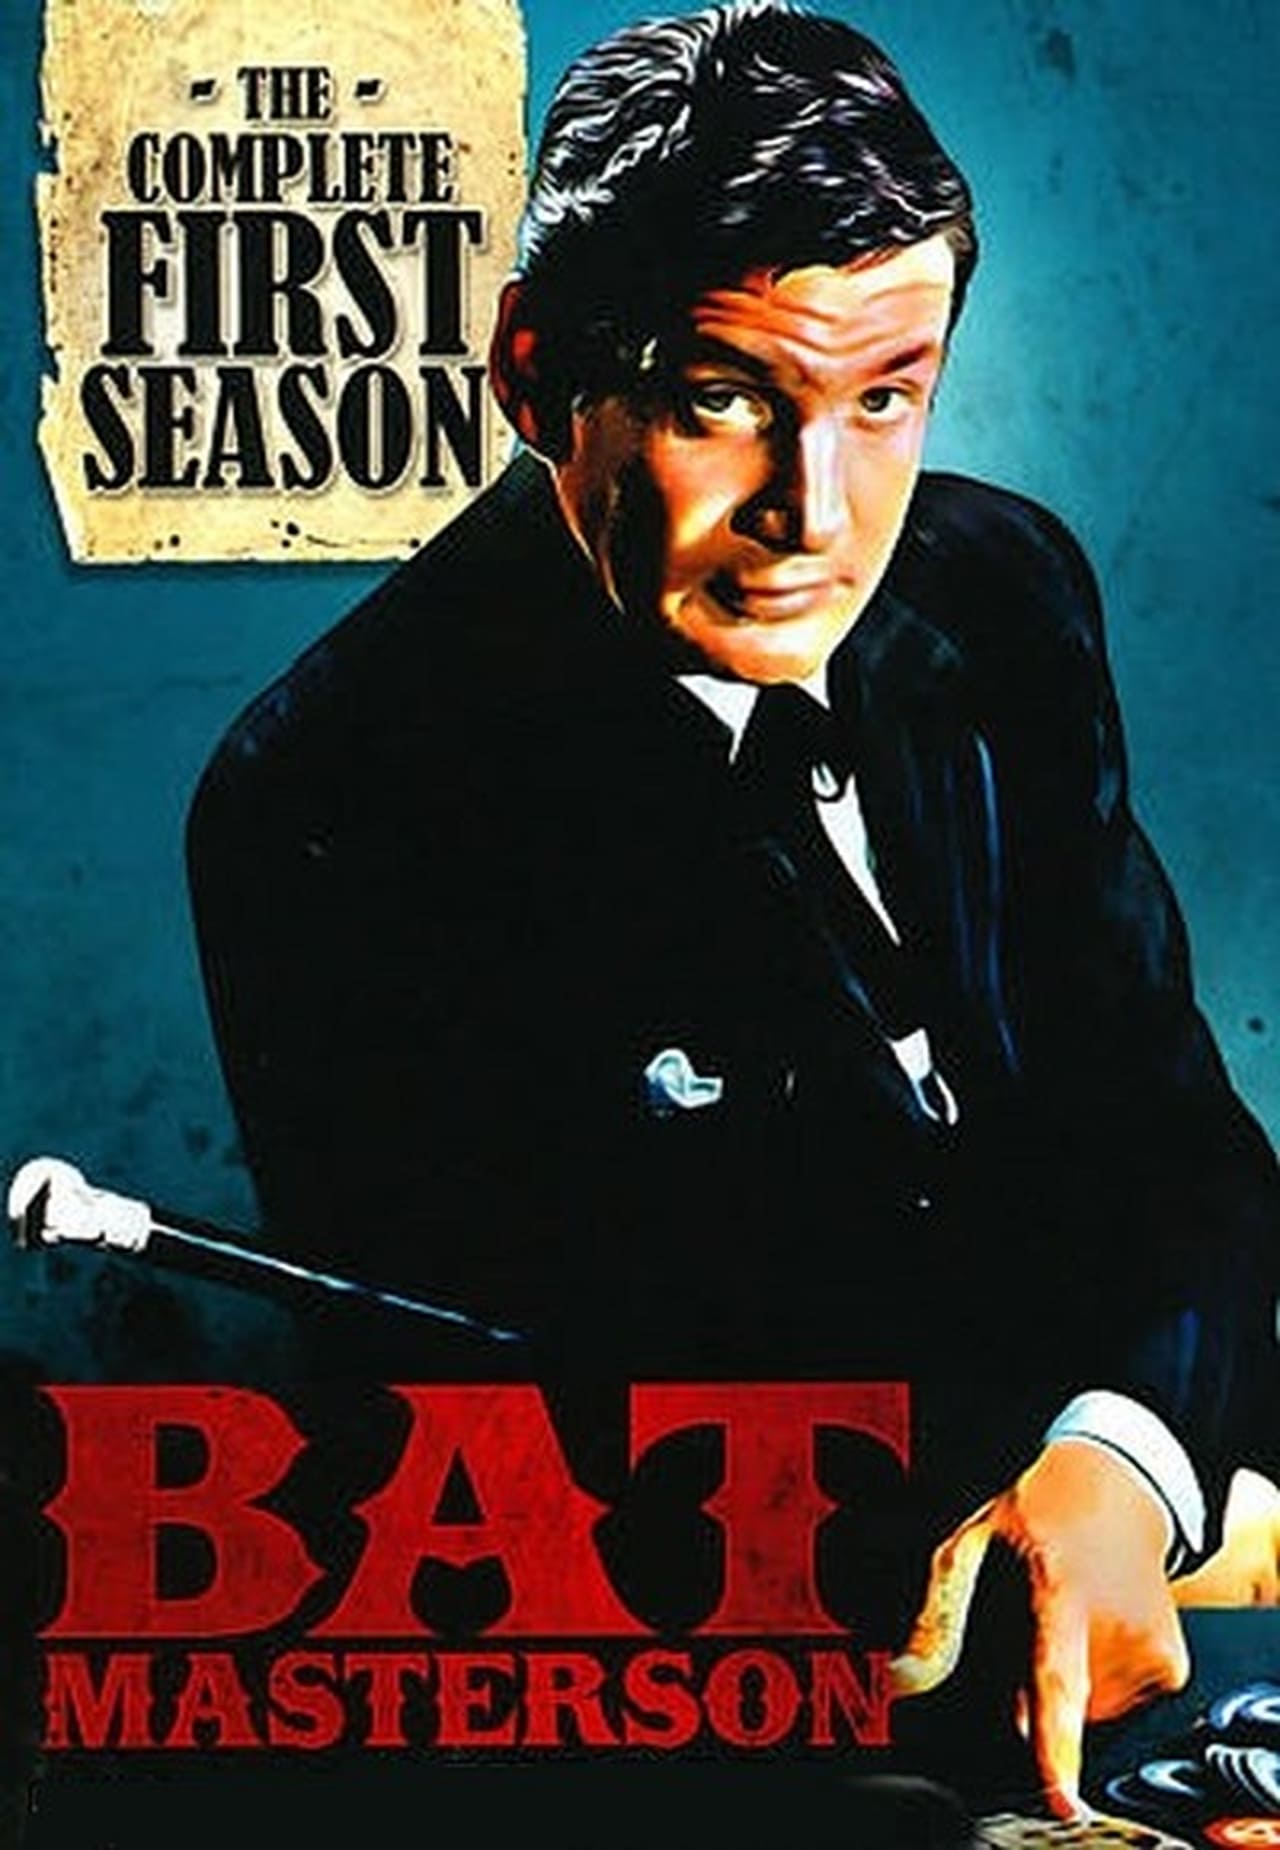 Bat Masterson (1958)